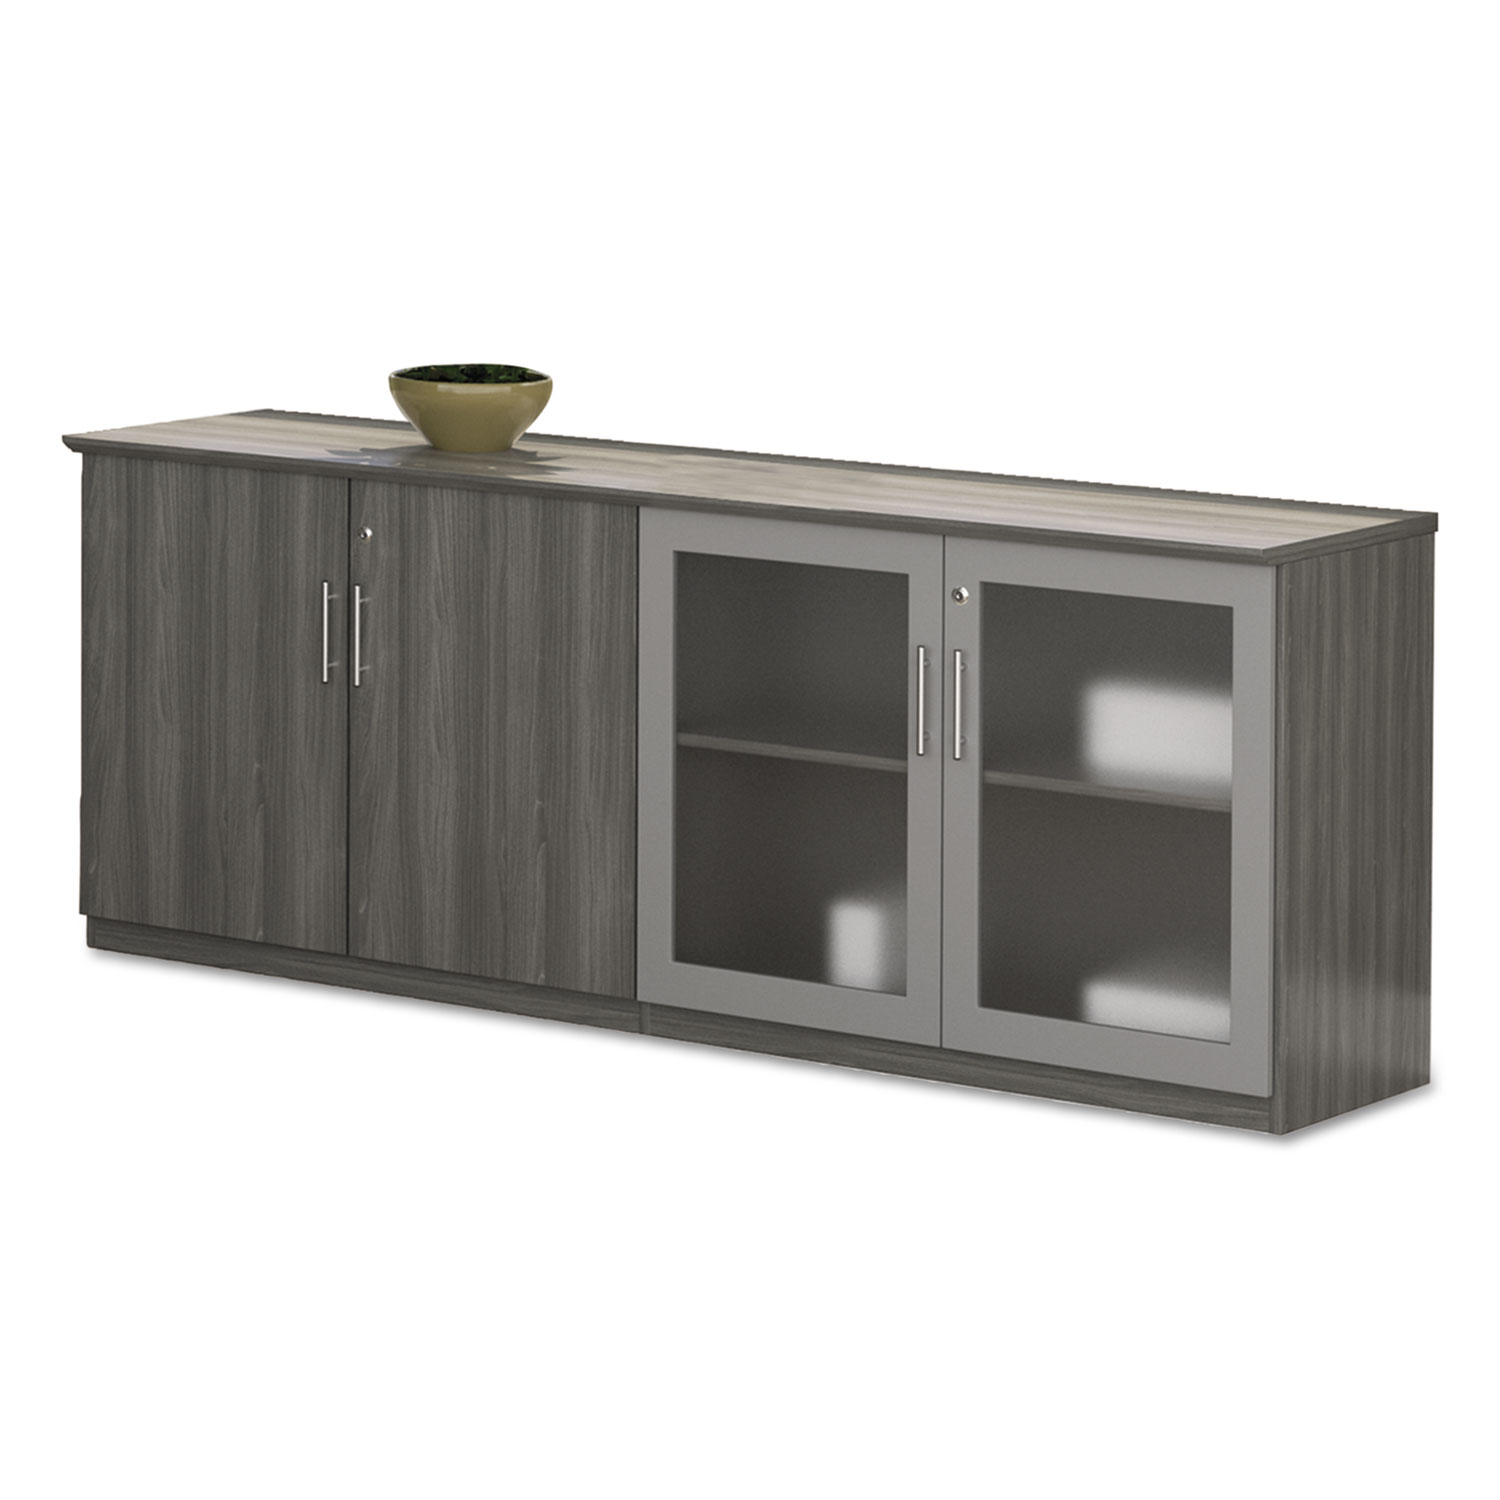  Safco MVLCDLGS Medina Series Low Wall Cabinet with Doors, 72w x 20d x 29 1/2h, Gray Steel, Box2 (MLNMVLCDLGS) 